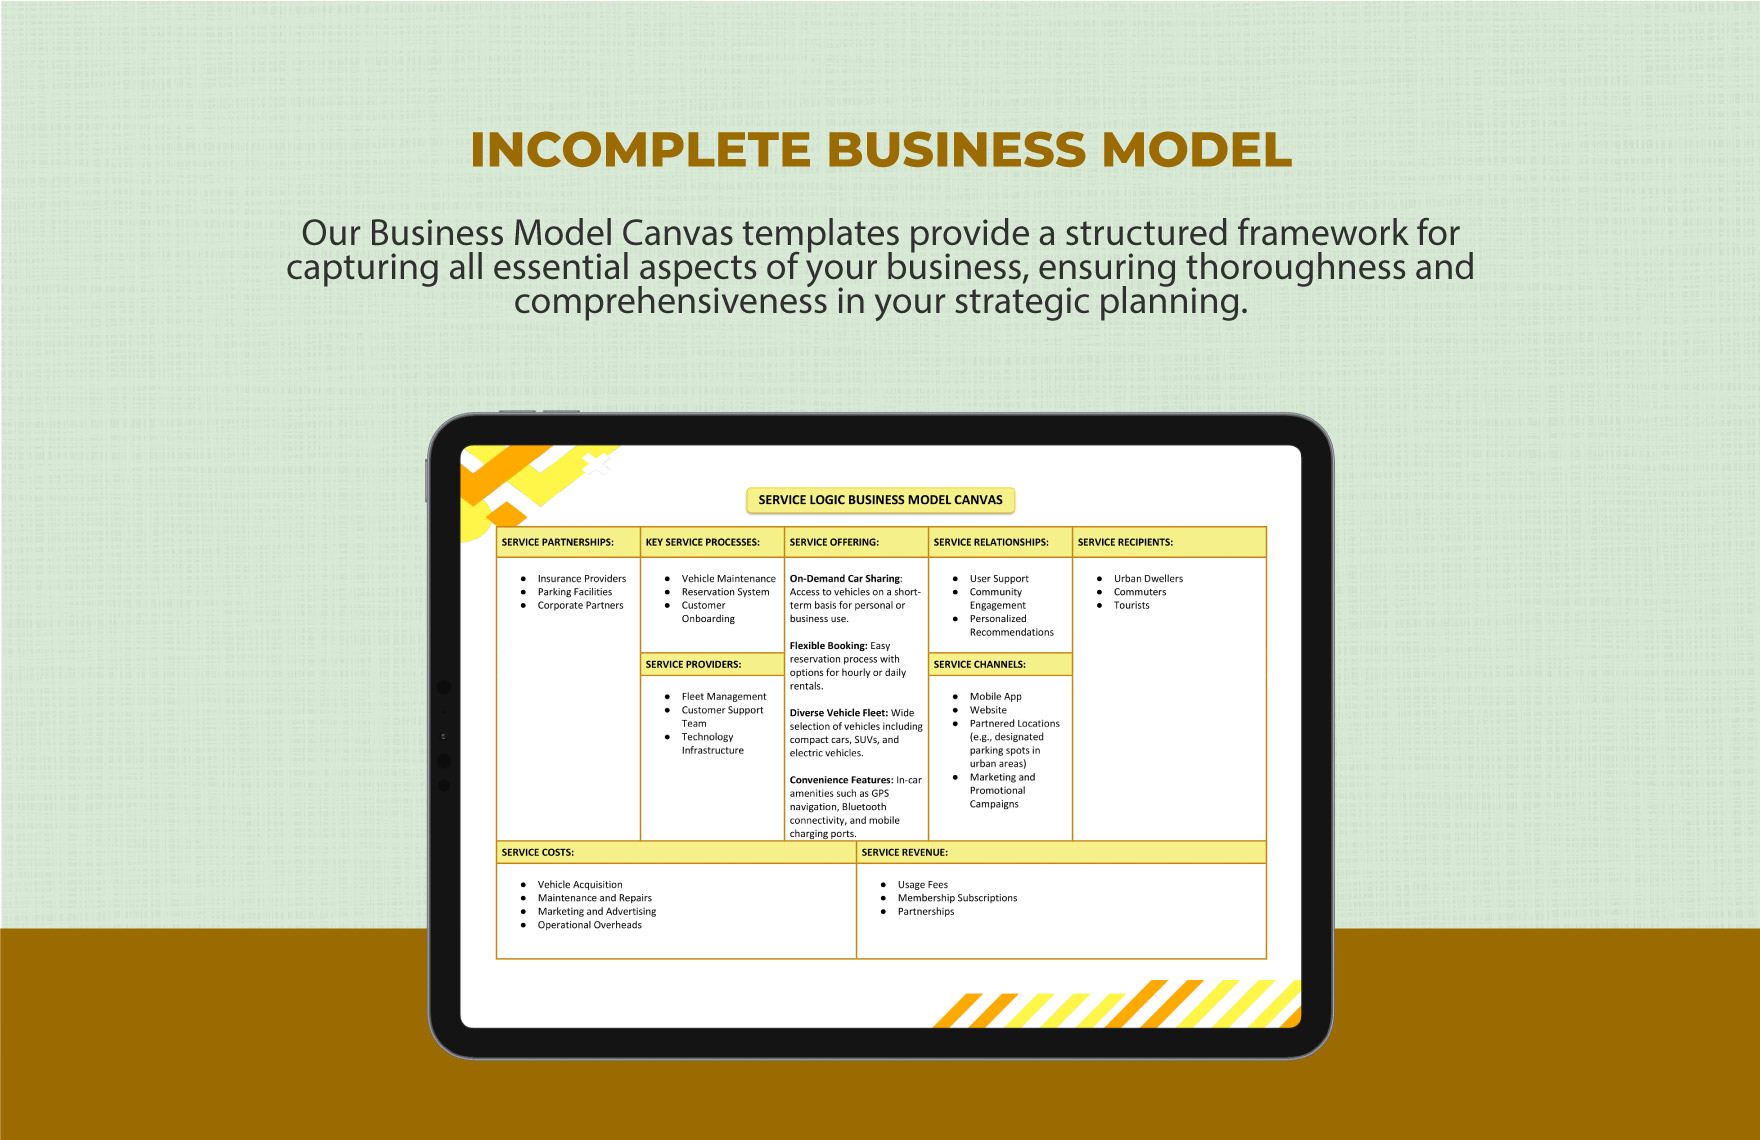 Service Logic Business Model Canvas Template